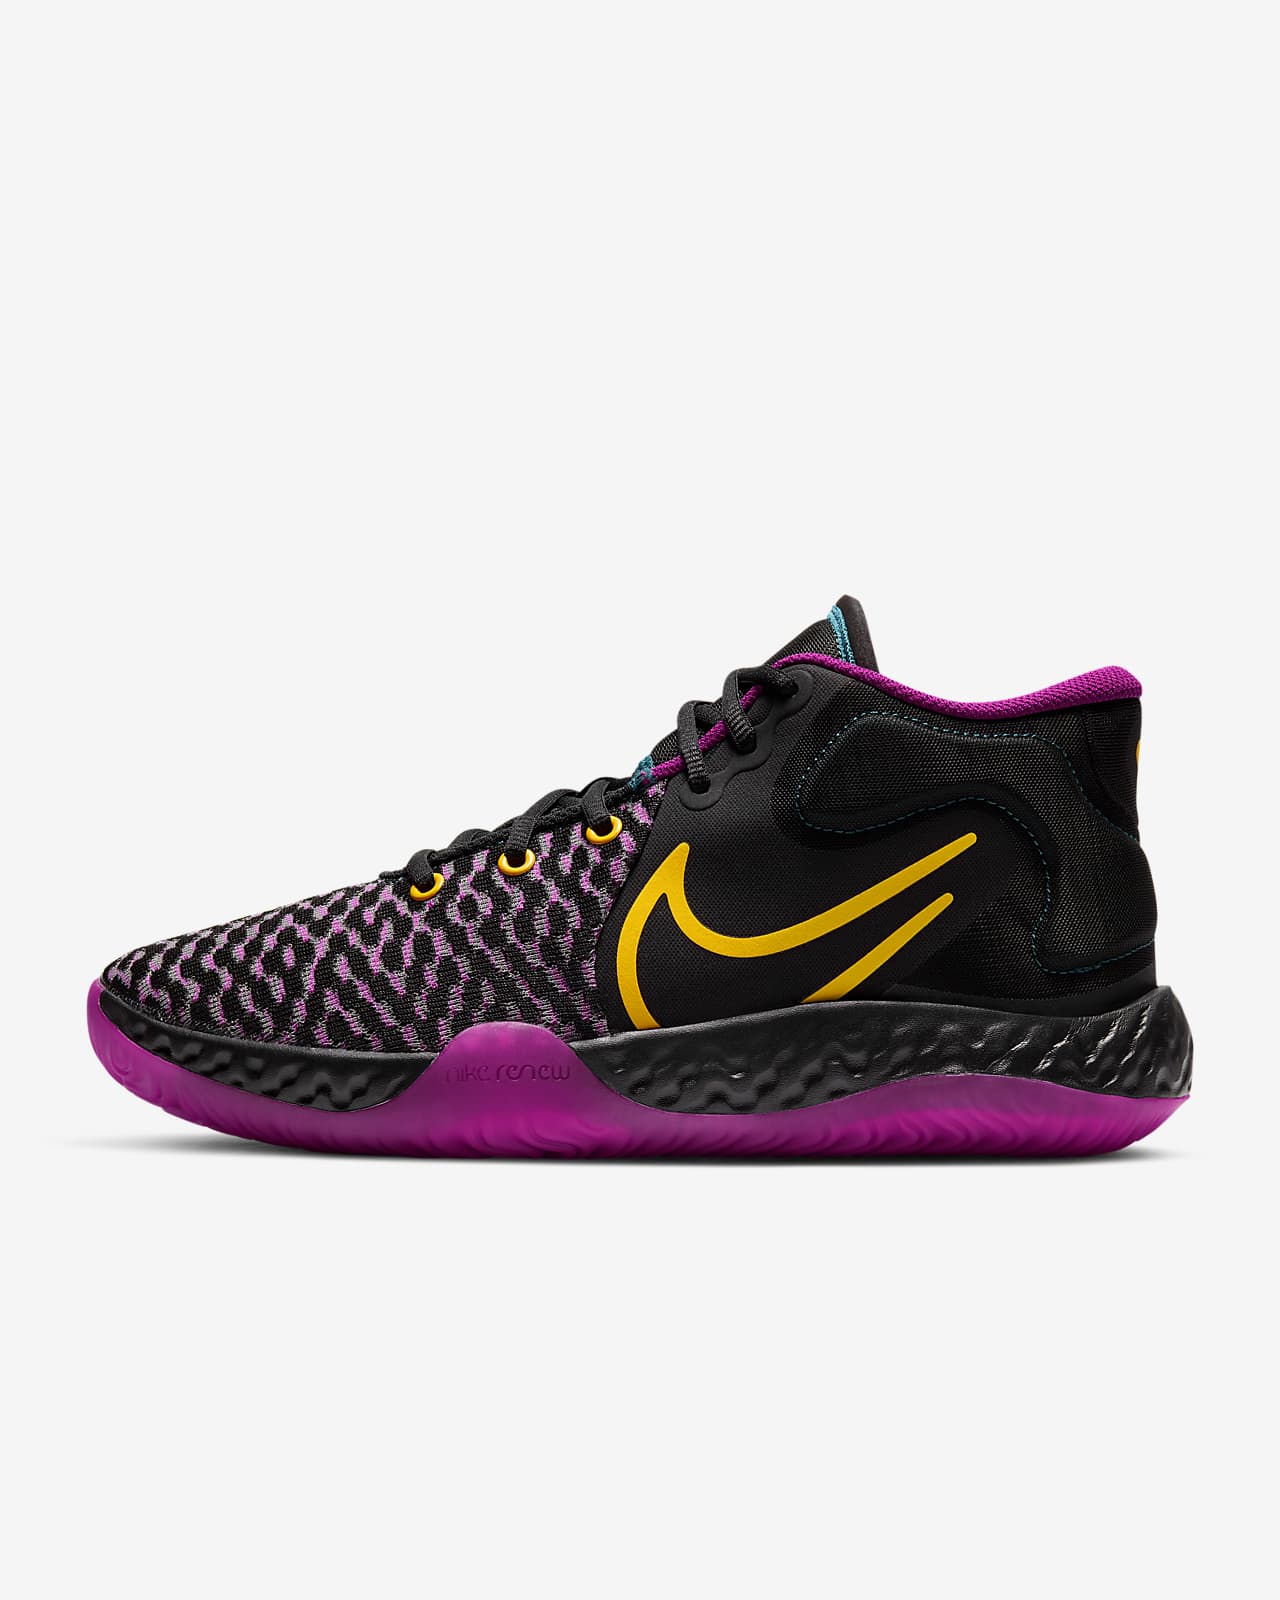 KD Trey 5 VIII EP Basketball Shoe. Nike IN